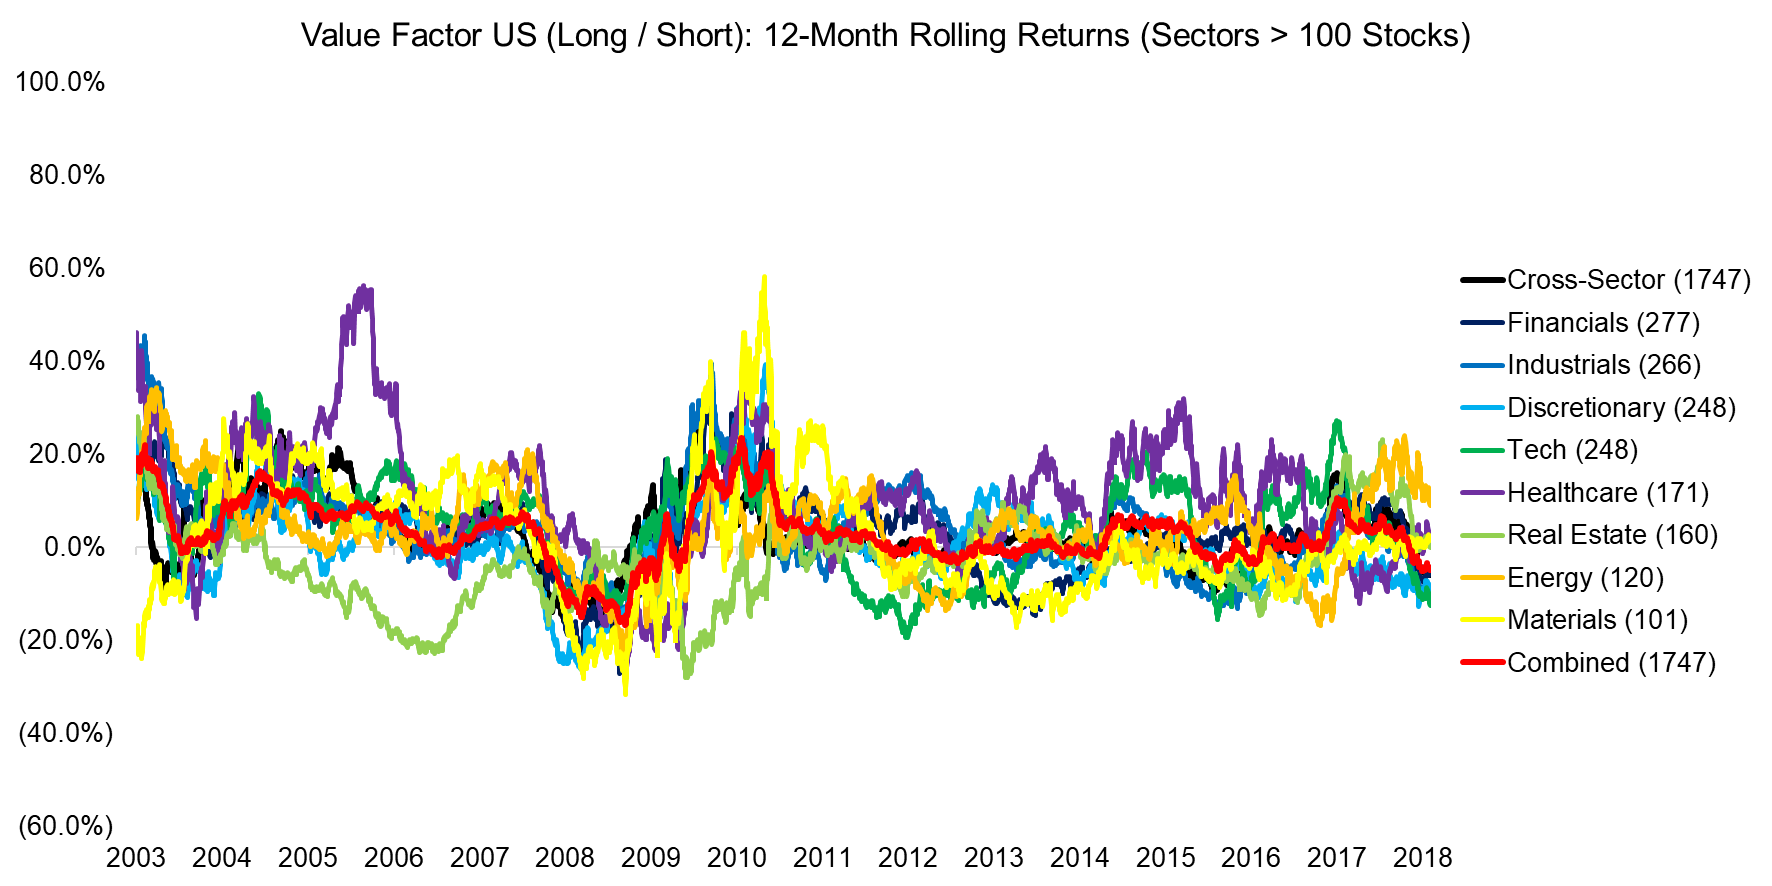 Value Factor US (Long Short) 12-Month Rolling Returns (Sectors 100 Stocks)